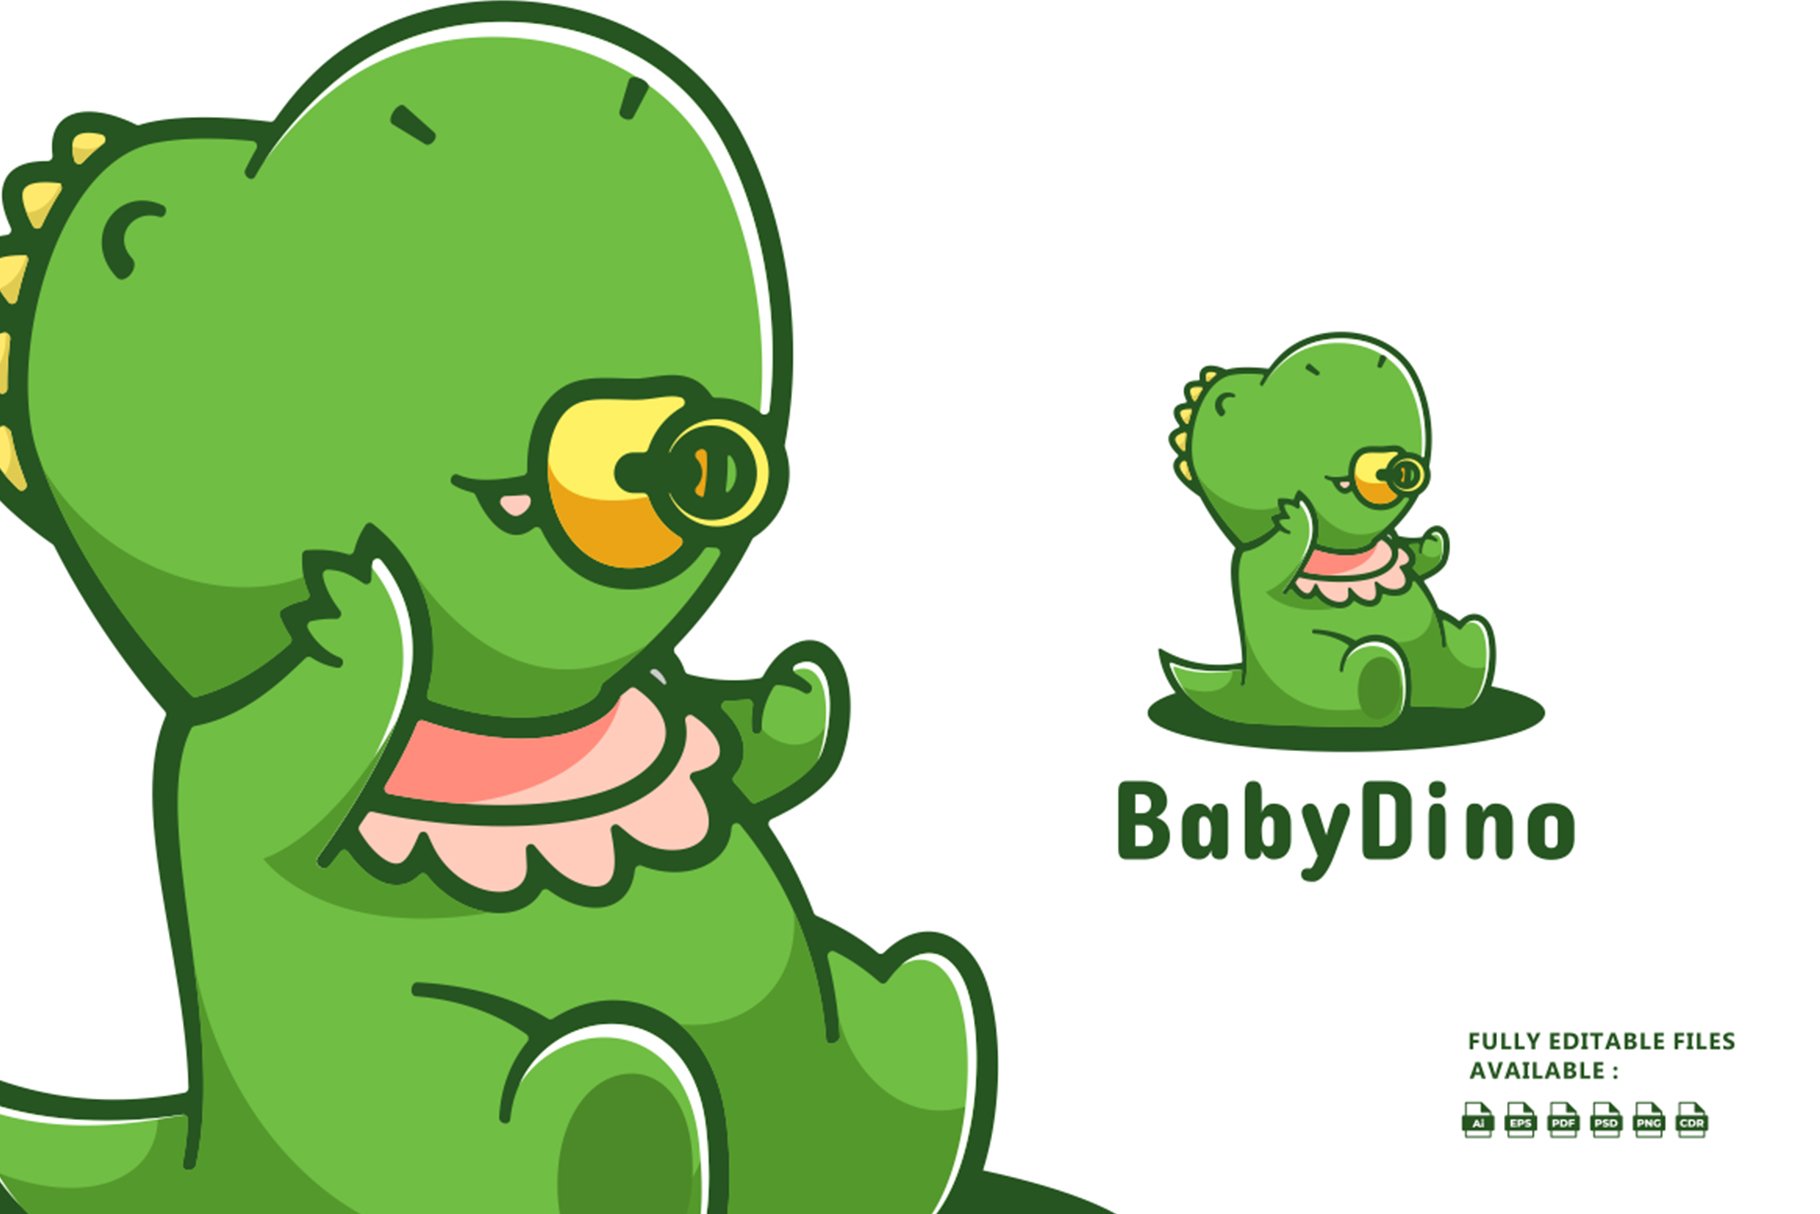 Baby Dino Cartoon Logo cover image.